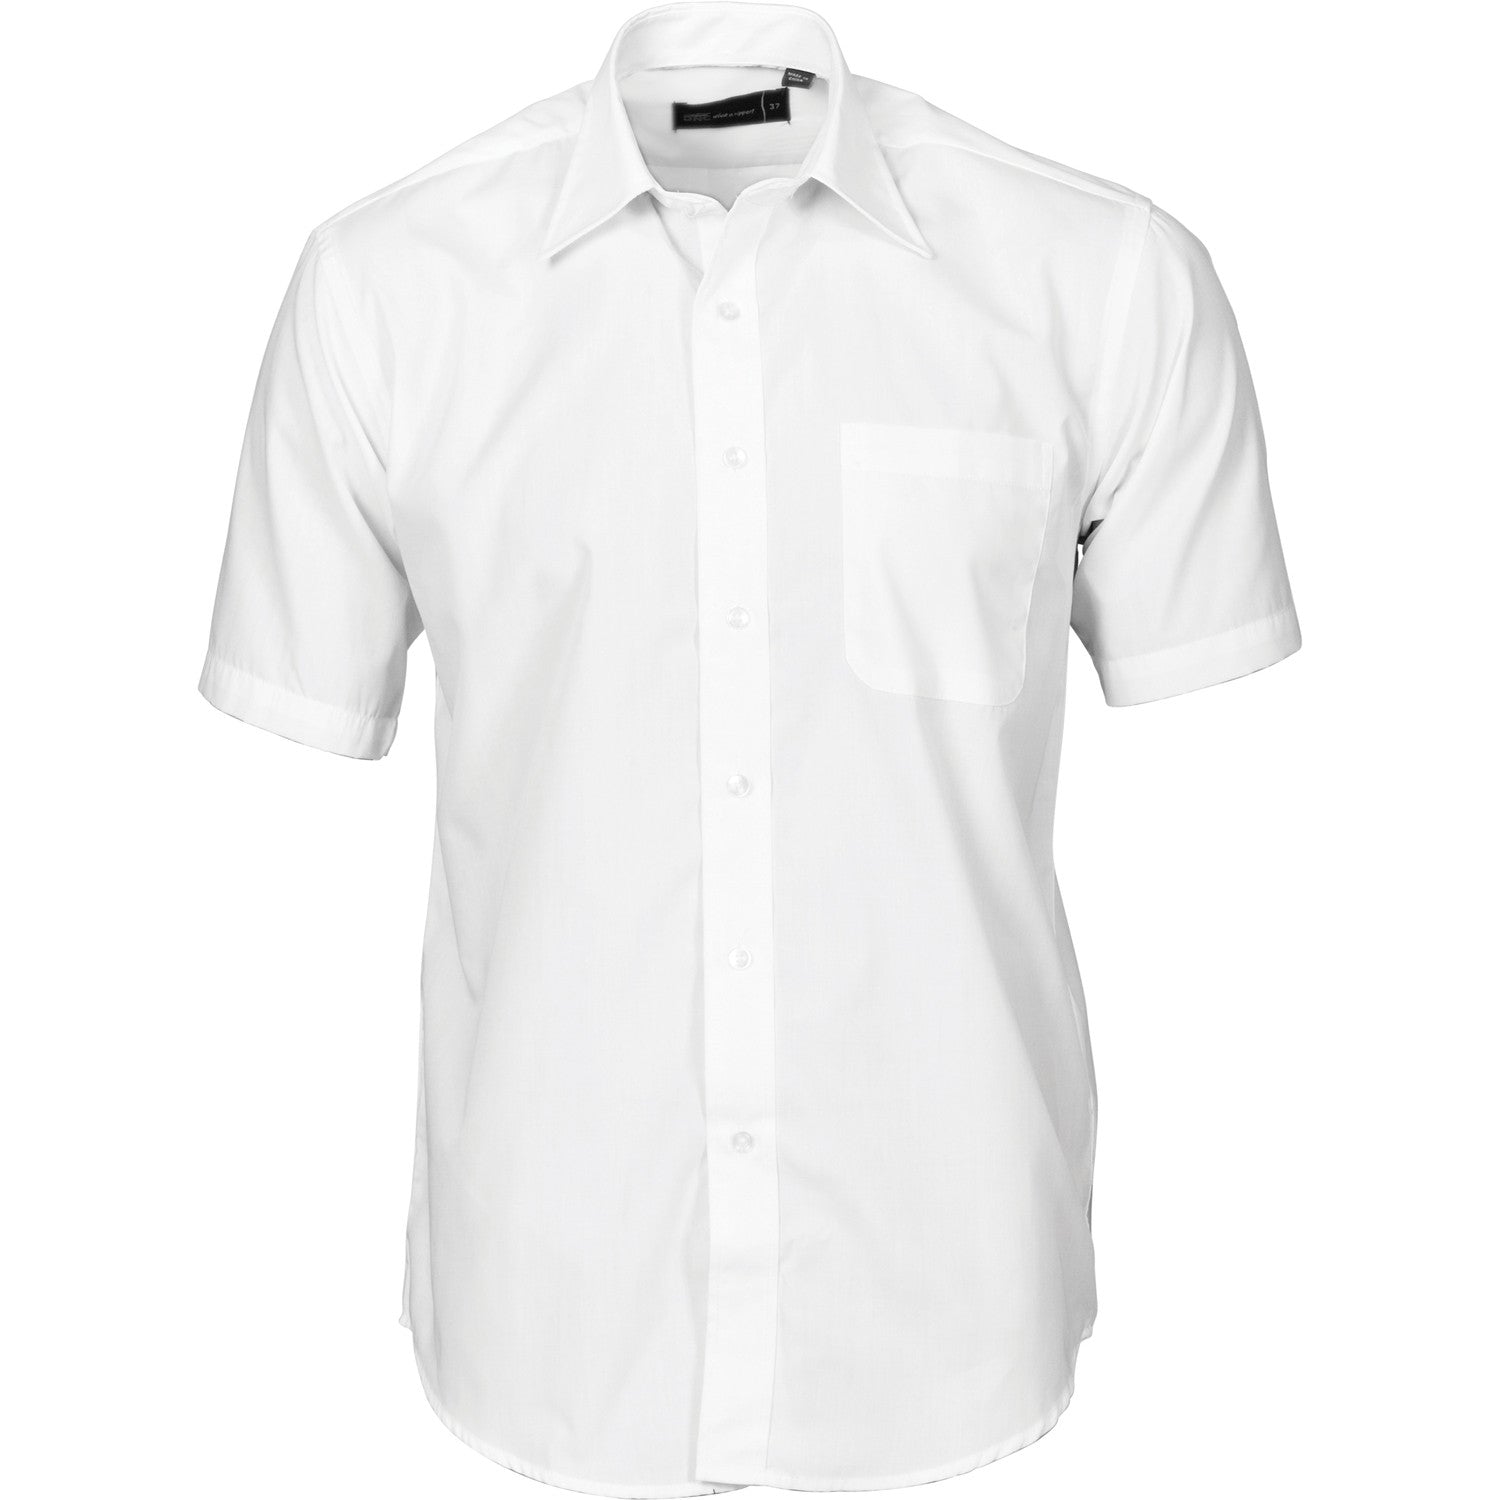 DNC Polyester Cotton S/S Business Shirt (4131)